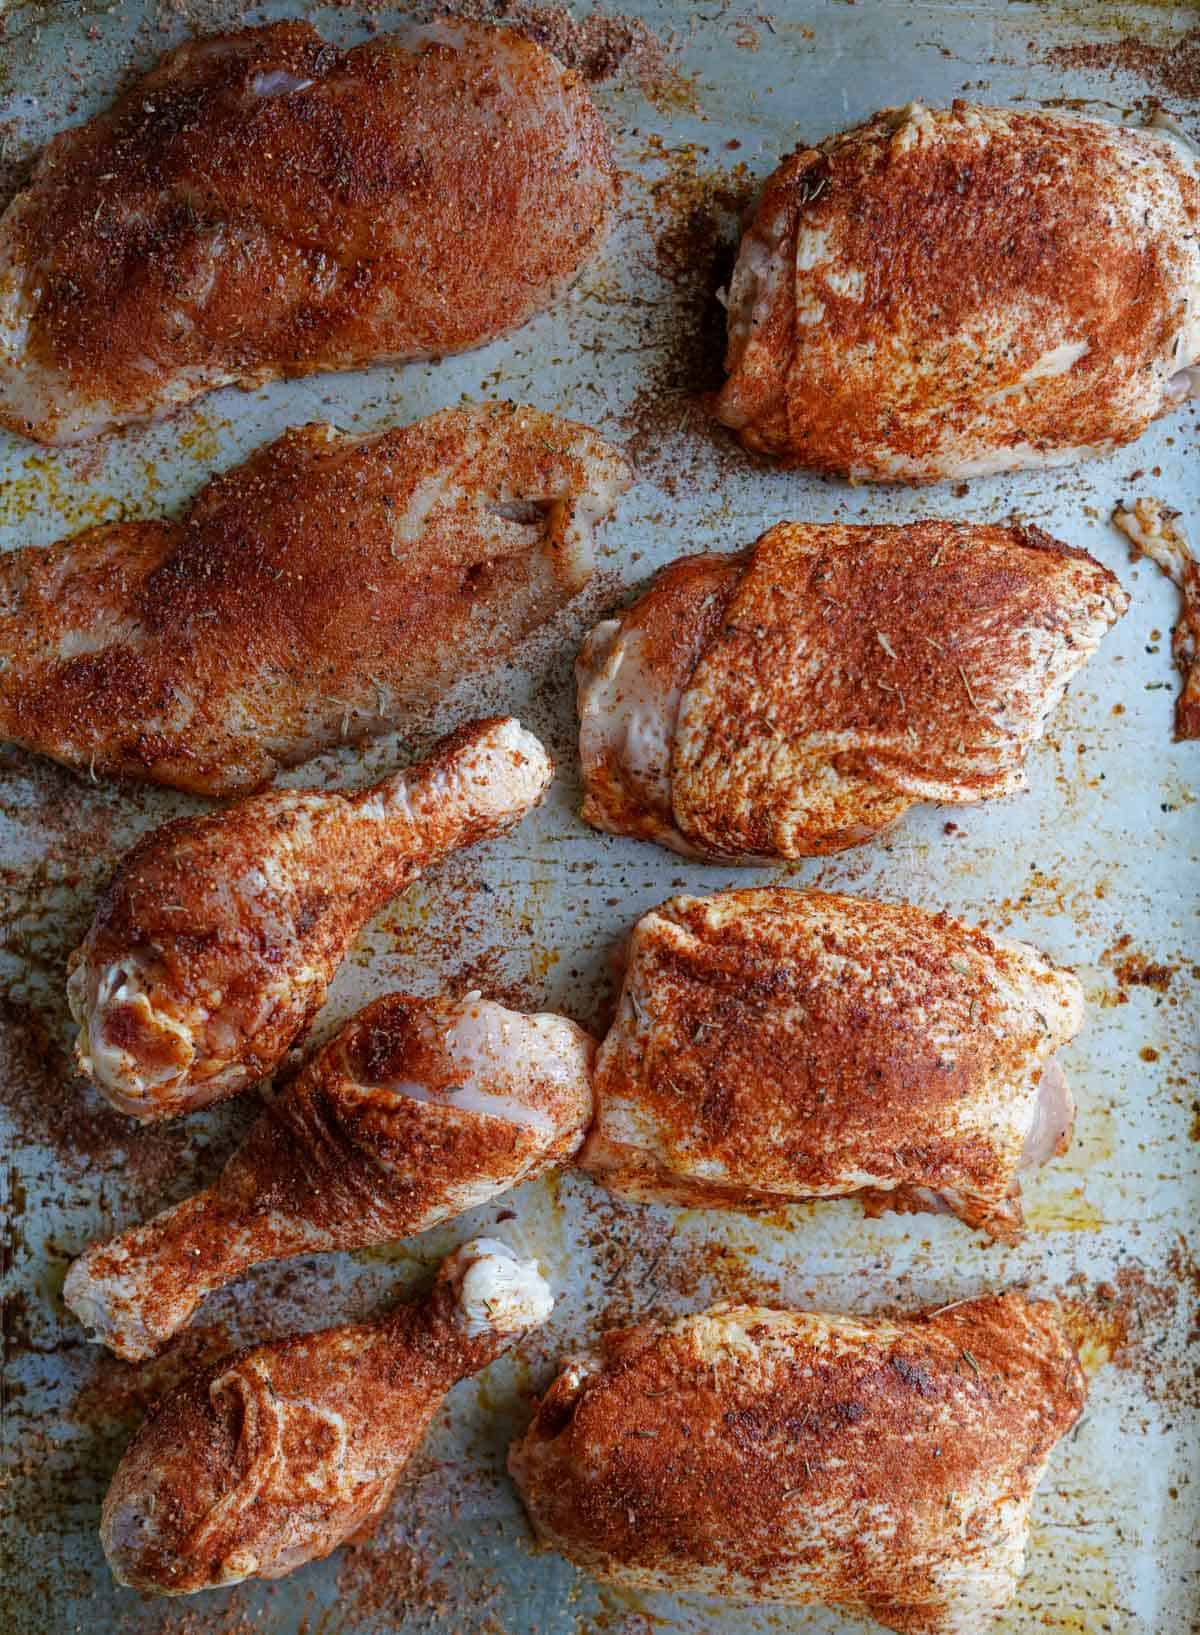 Jerk Seasoning coated onto pieces of raw chicken